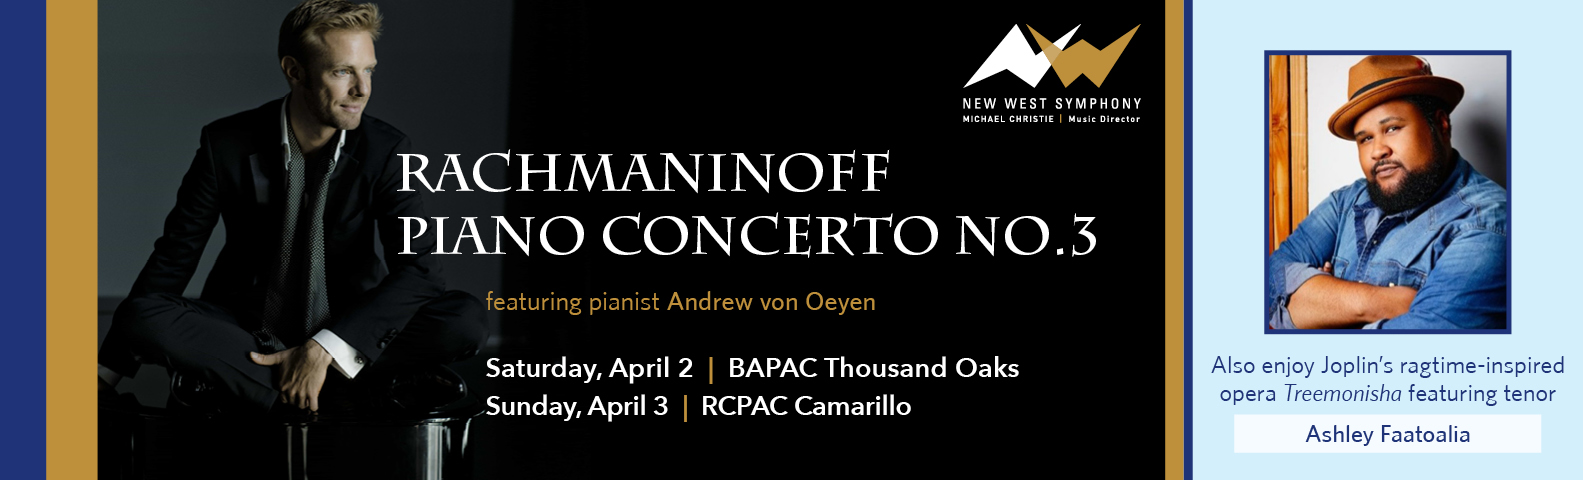 Rachmaninoff Piano Concerto 3, April 2 and 3